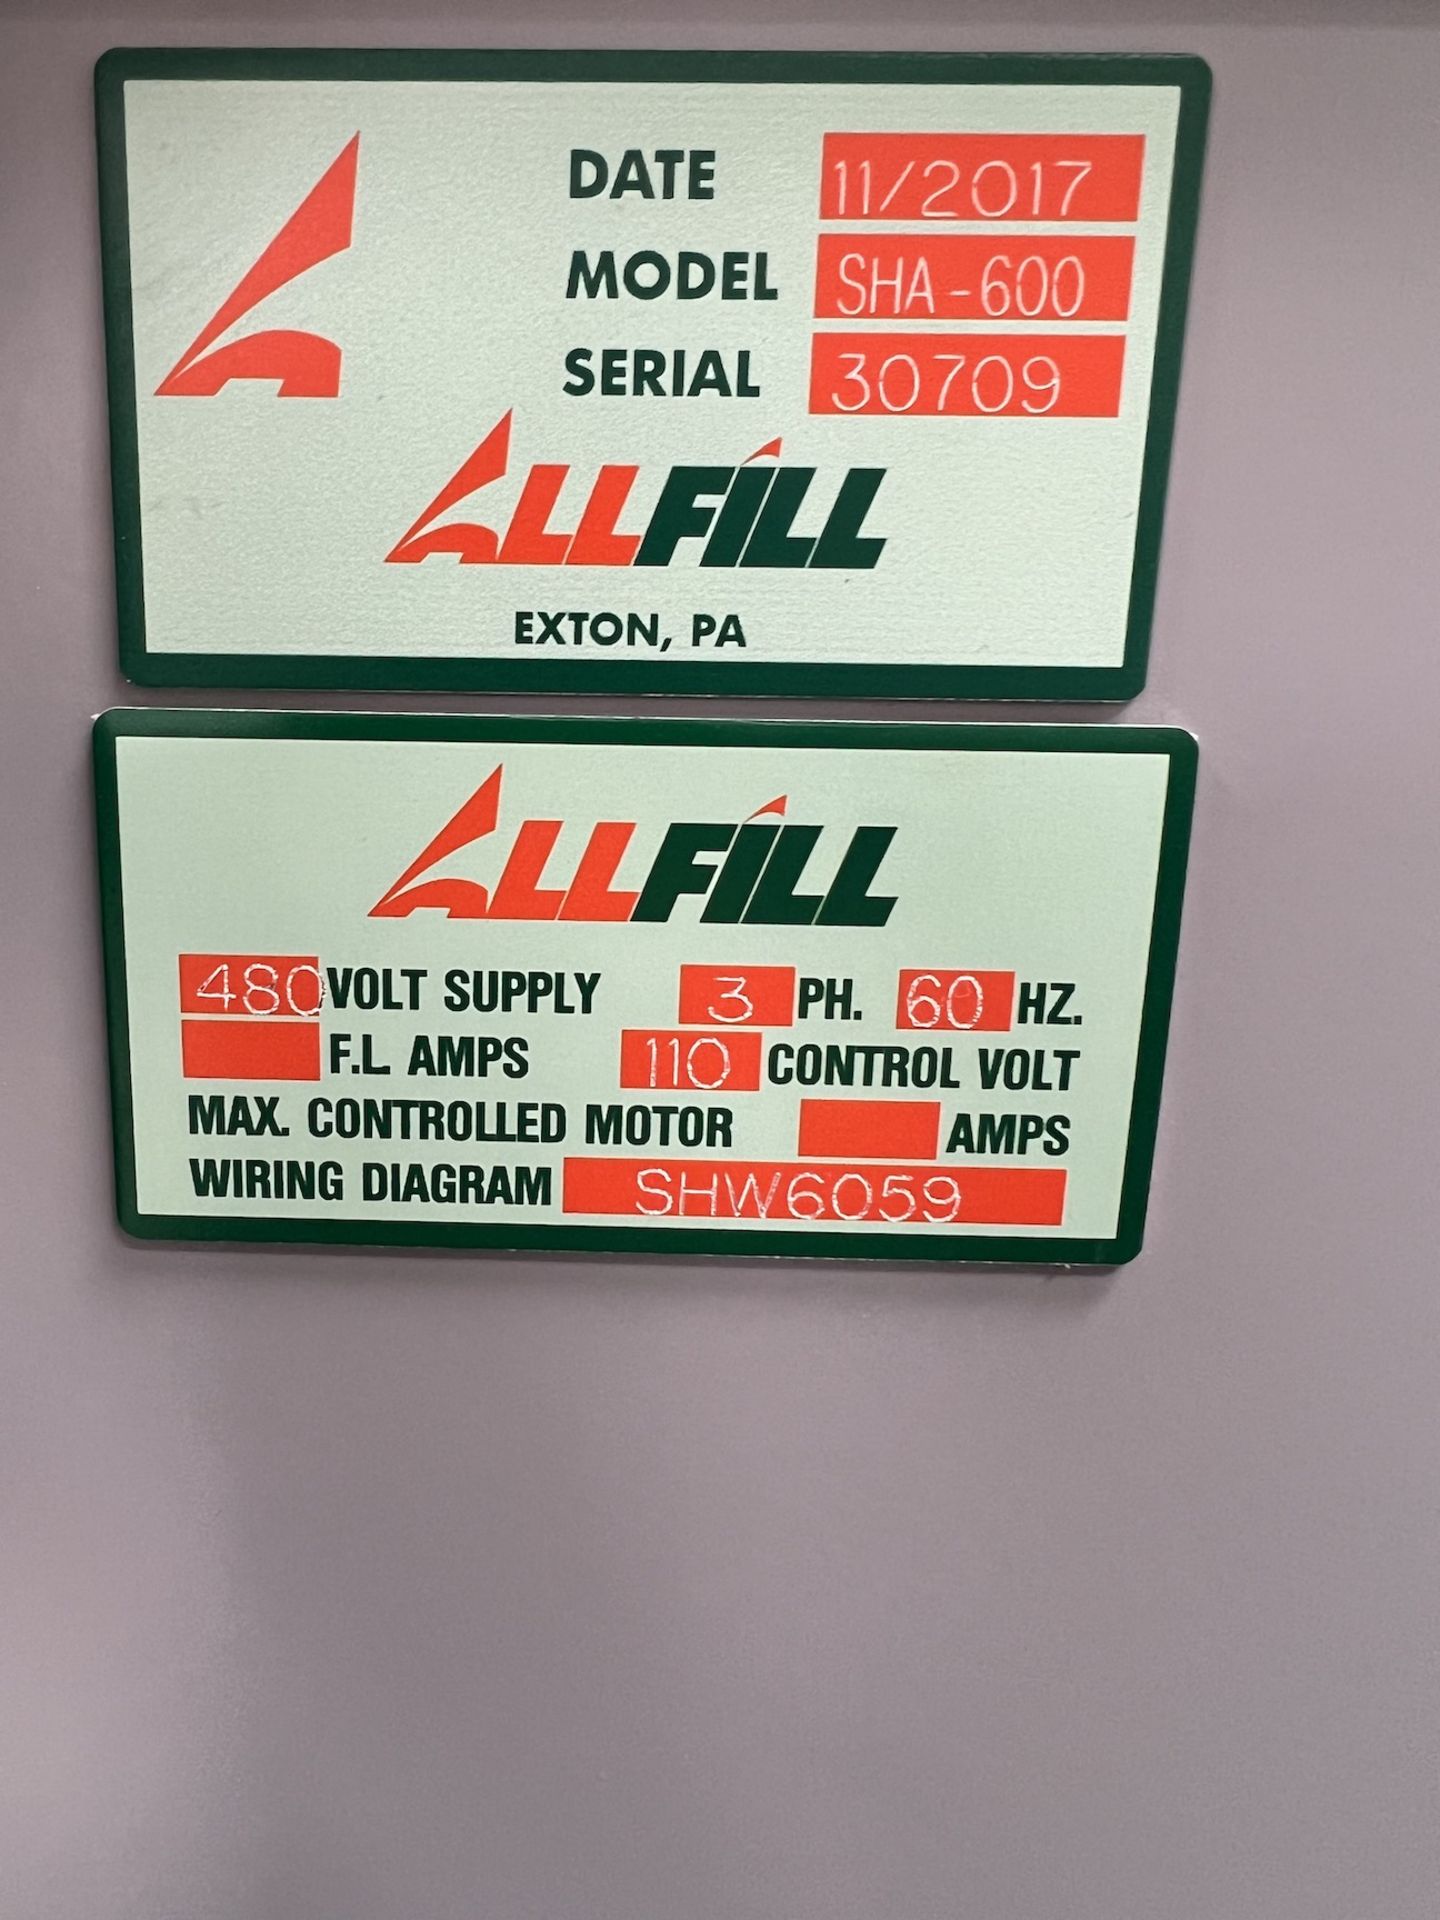 2017 ALLFILL AUGER FILLER, MODEL SHA600, S/N 30709, ALLEN-BRADLEY 1400 PLC480 V, 3 PHASE, 60 HZ - Image 16 of 20